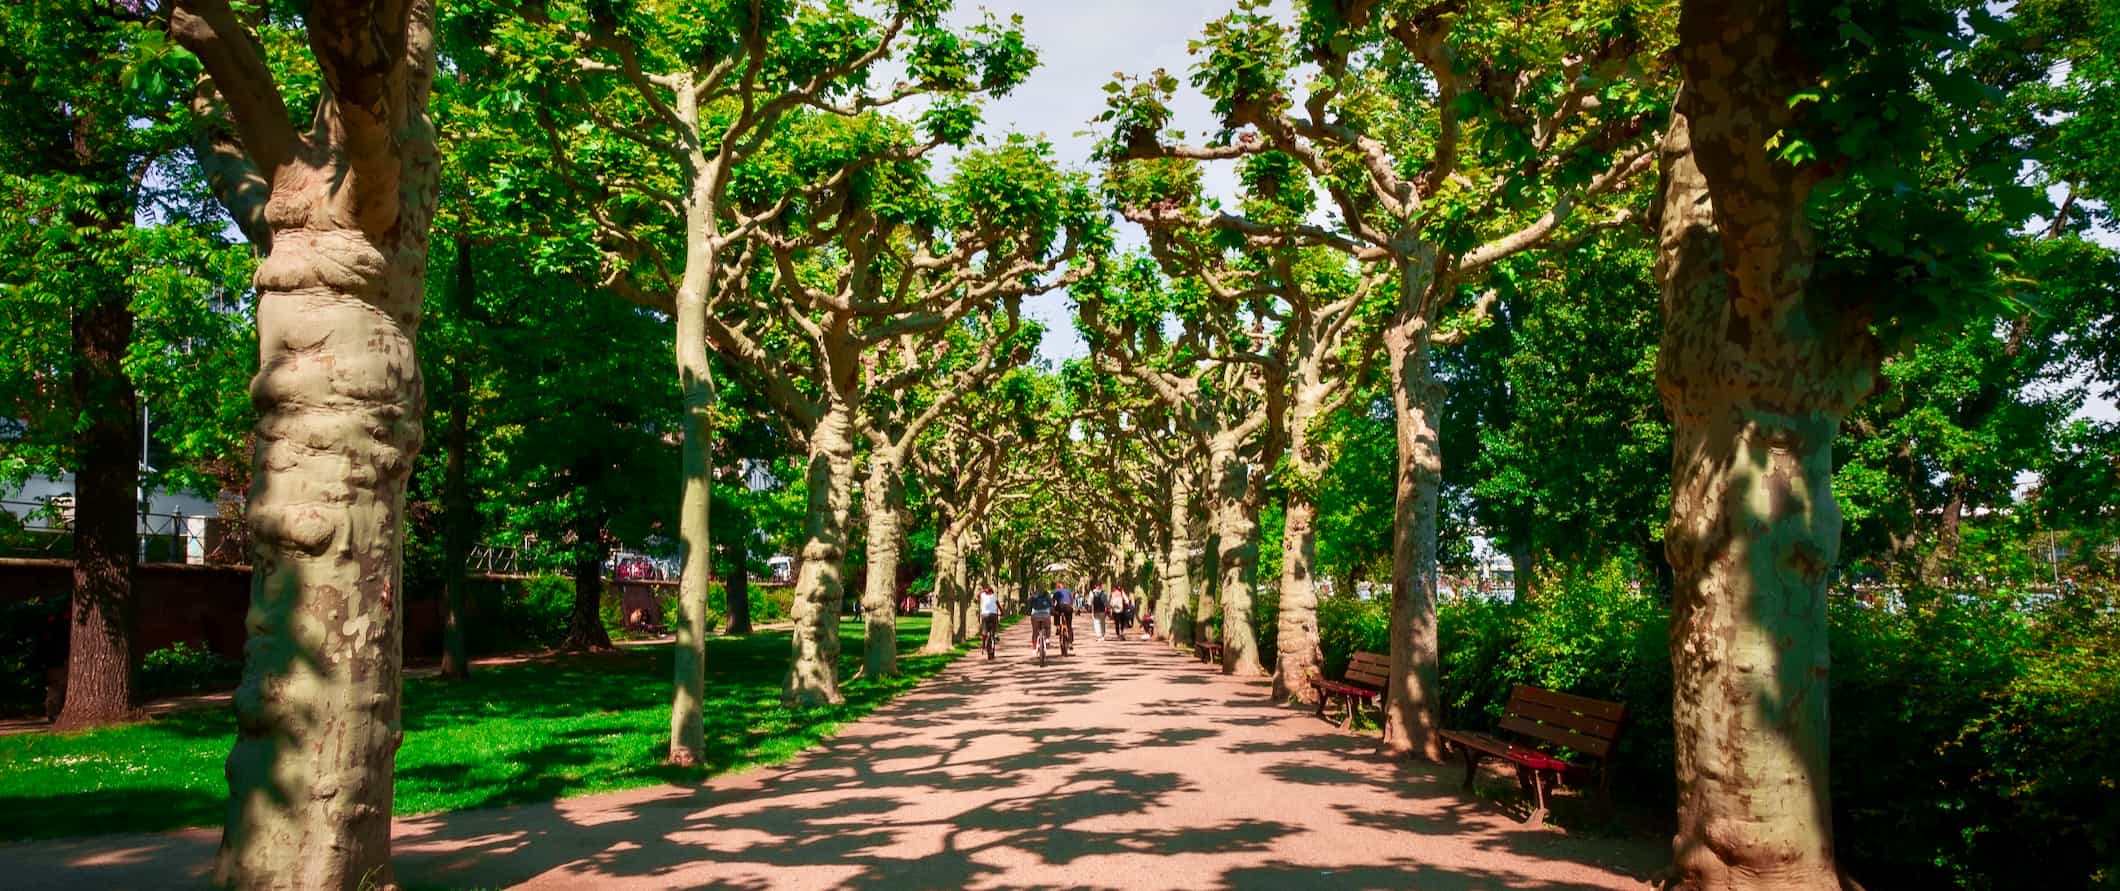 A tree-lined walking path in a green park in Frankfurt, Germany